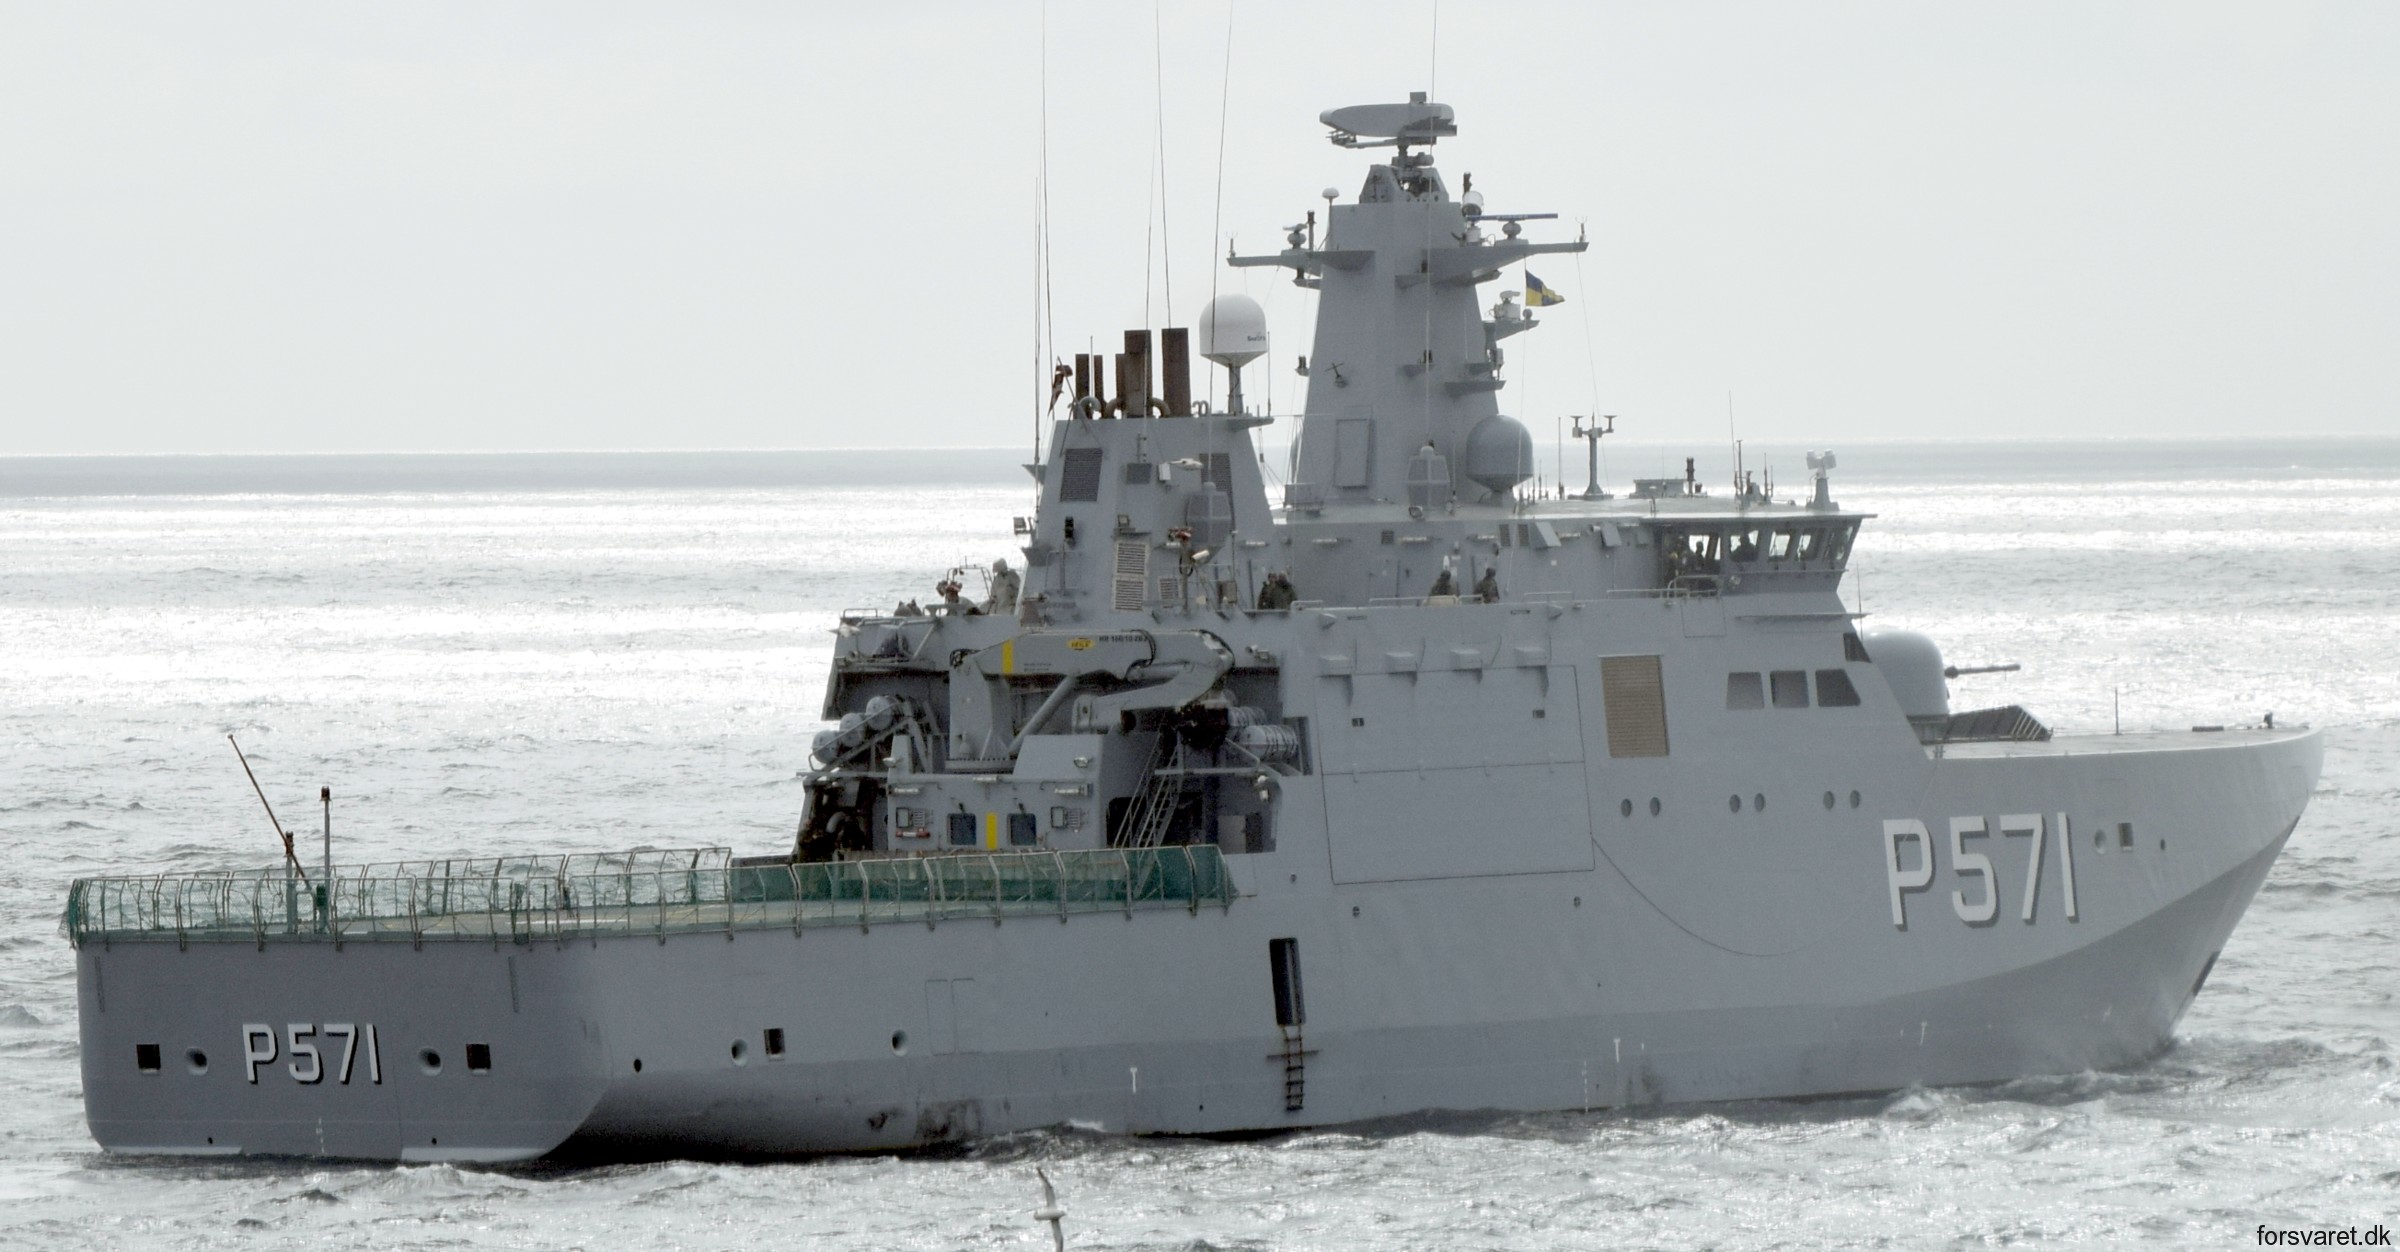 p-571 hdms ejnar mikkelsen knud rasmussen class offshore patrol vessel opv royal danish navy inspektionsfartøj 03